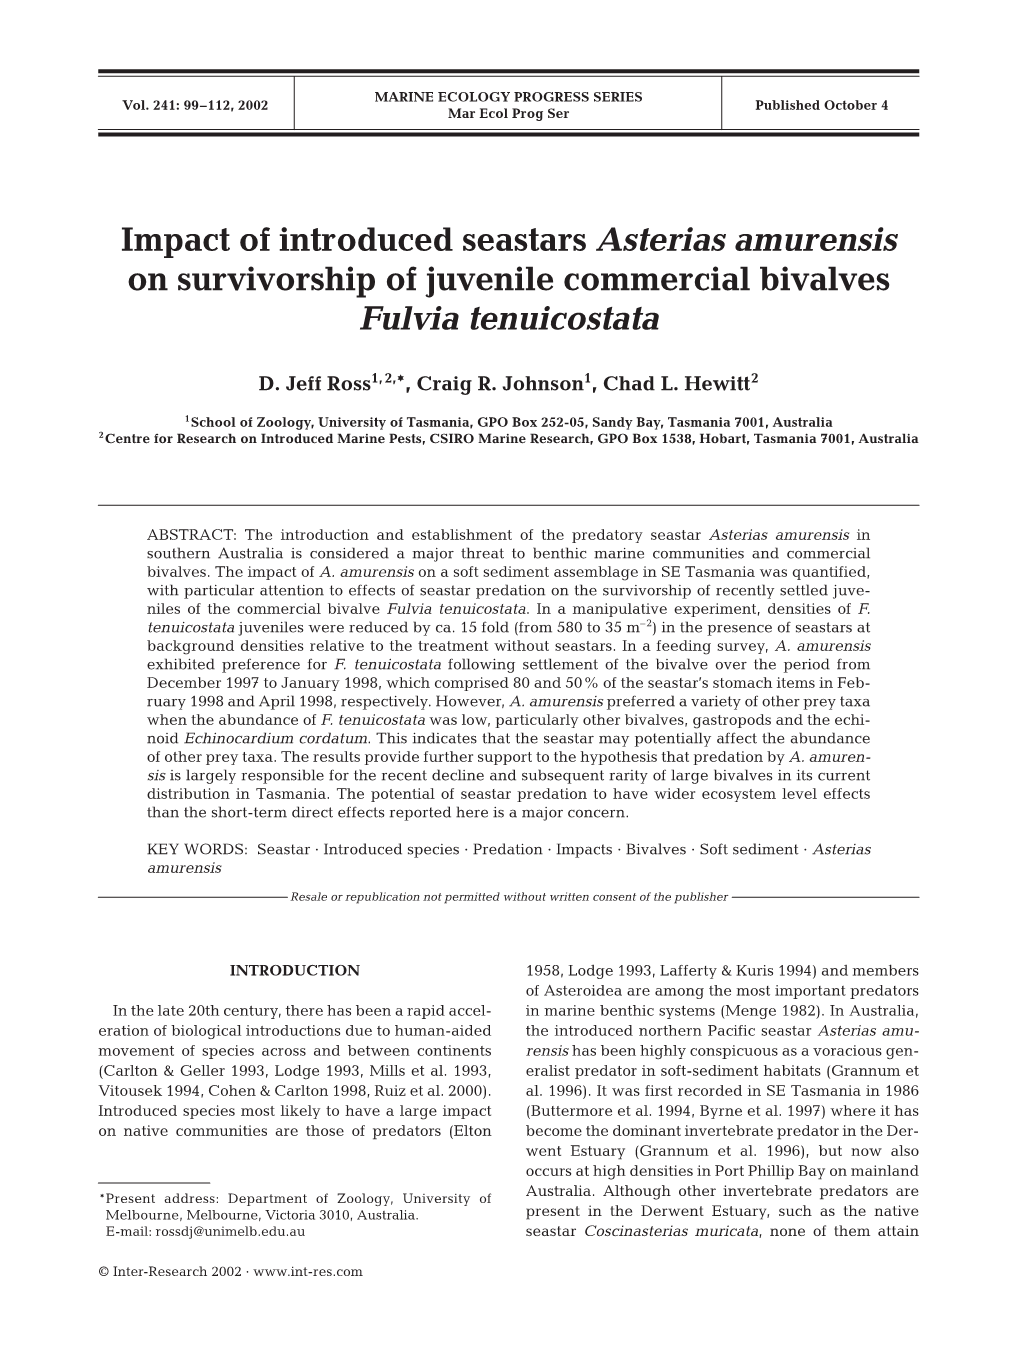 Impact of Introduced Seastars Asterias Amurensis on Survivorship of Juvenile Commercial Bivalves Fulvia Tenuicostata